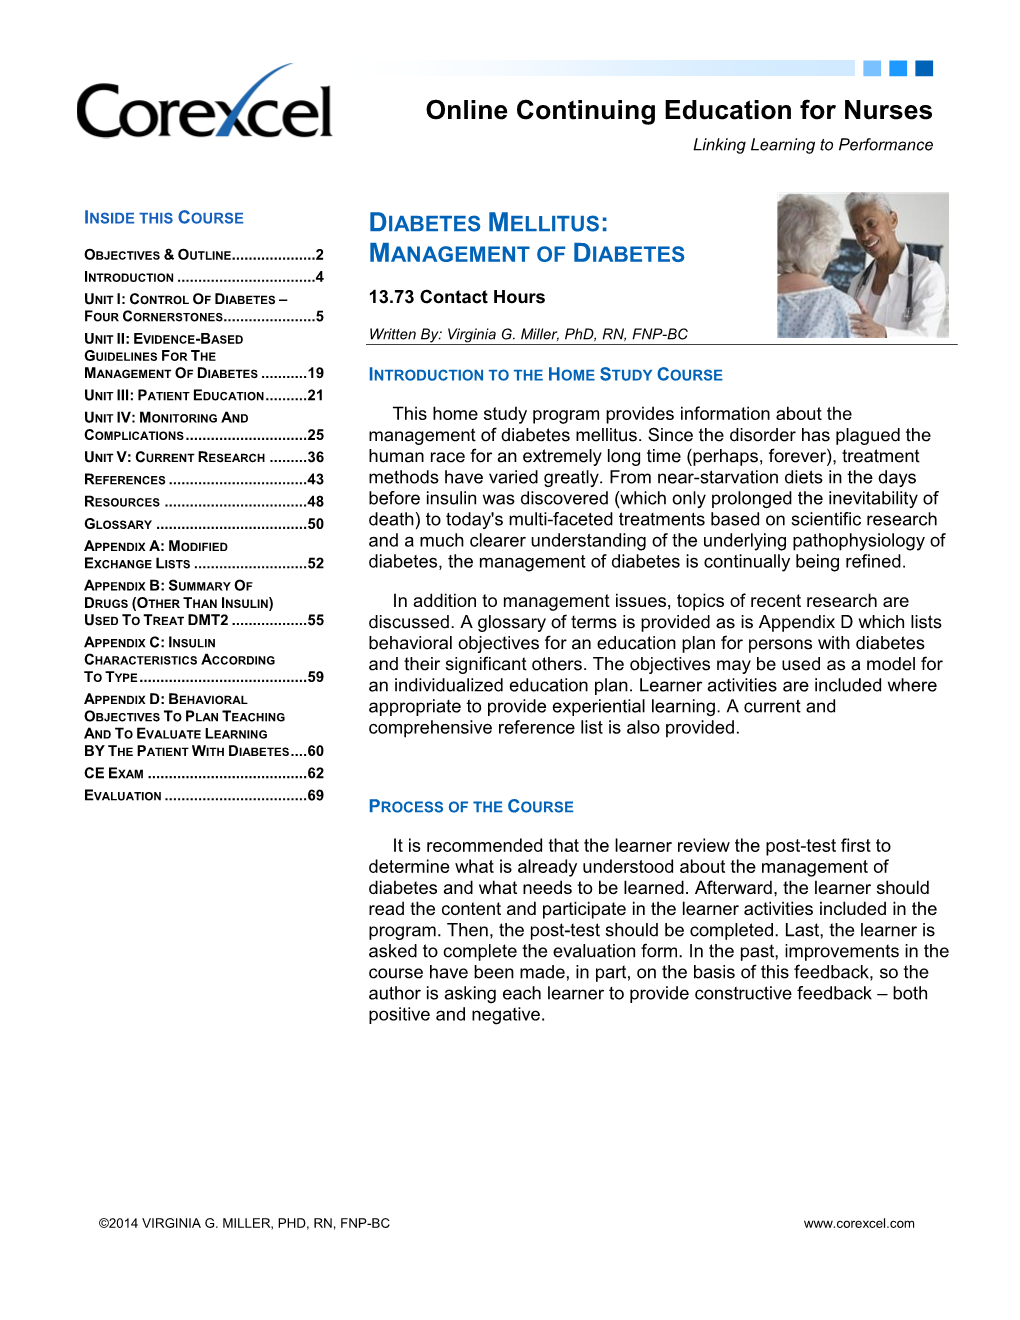 Diabetes Mellitus: Objectives & Outline